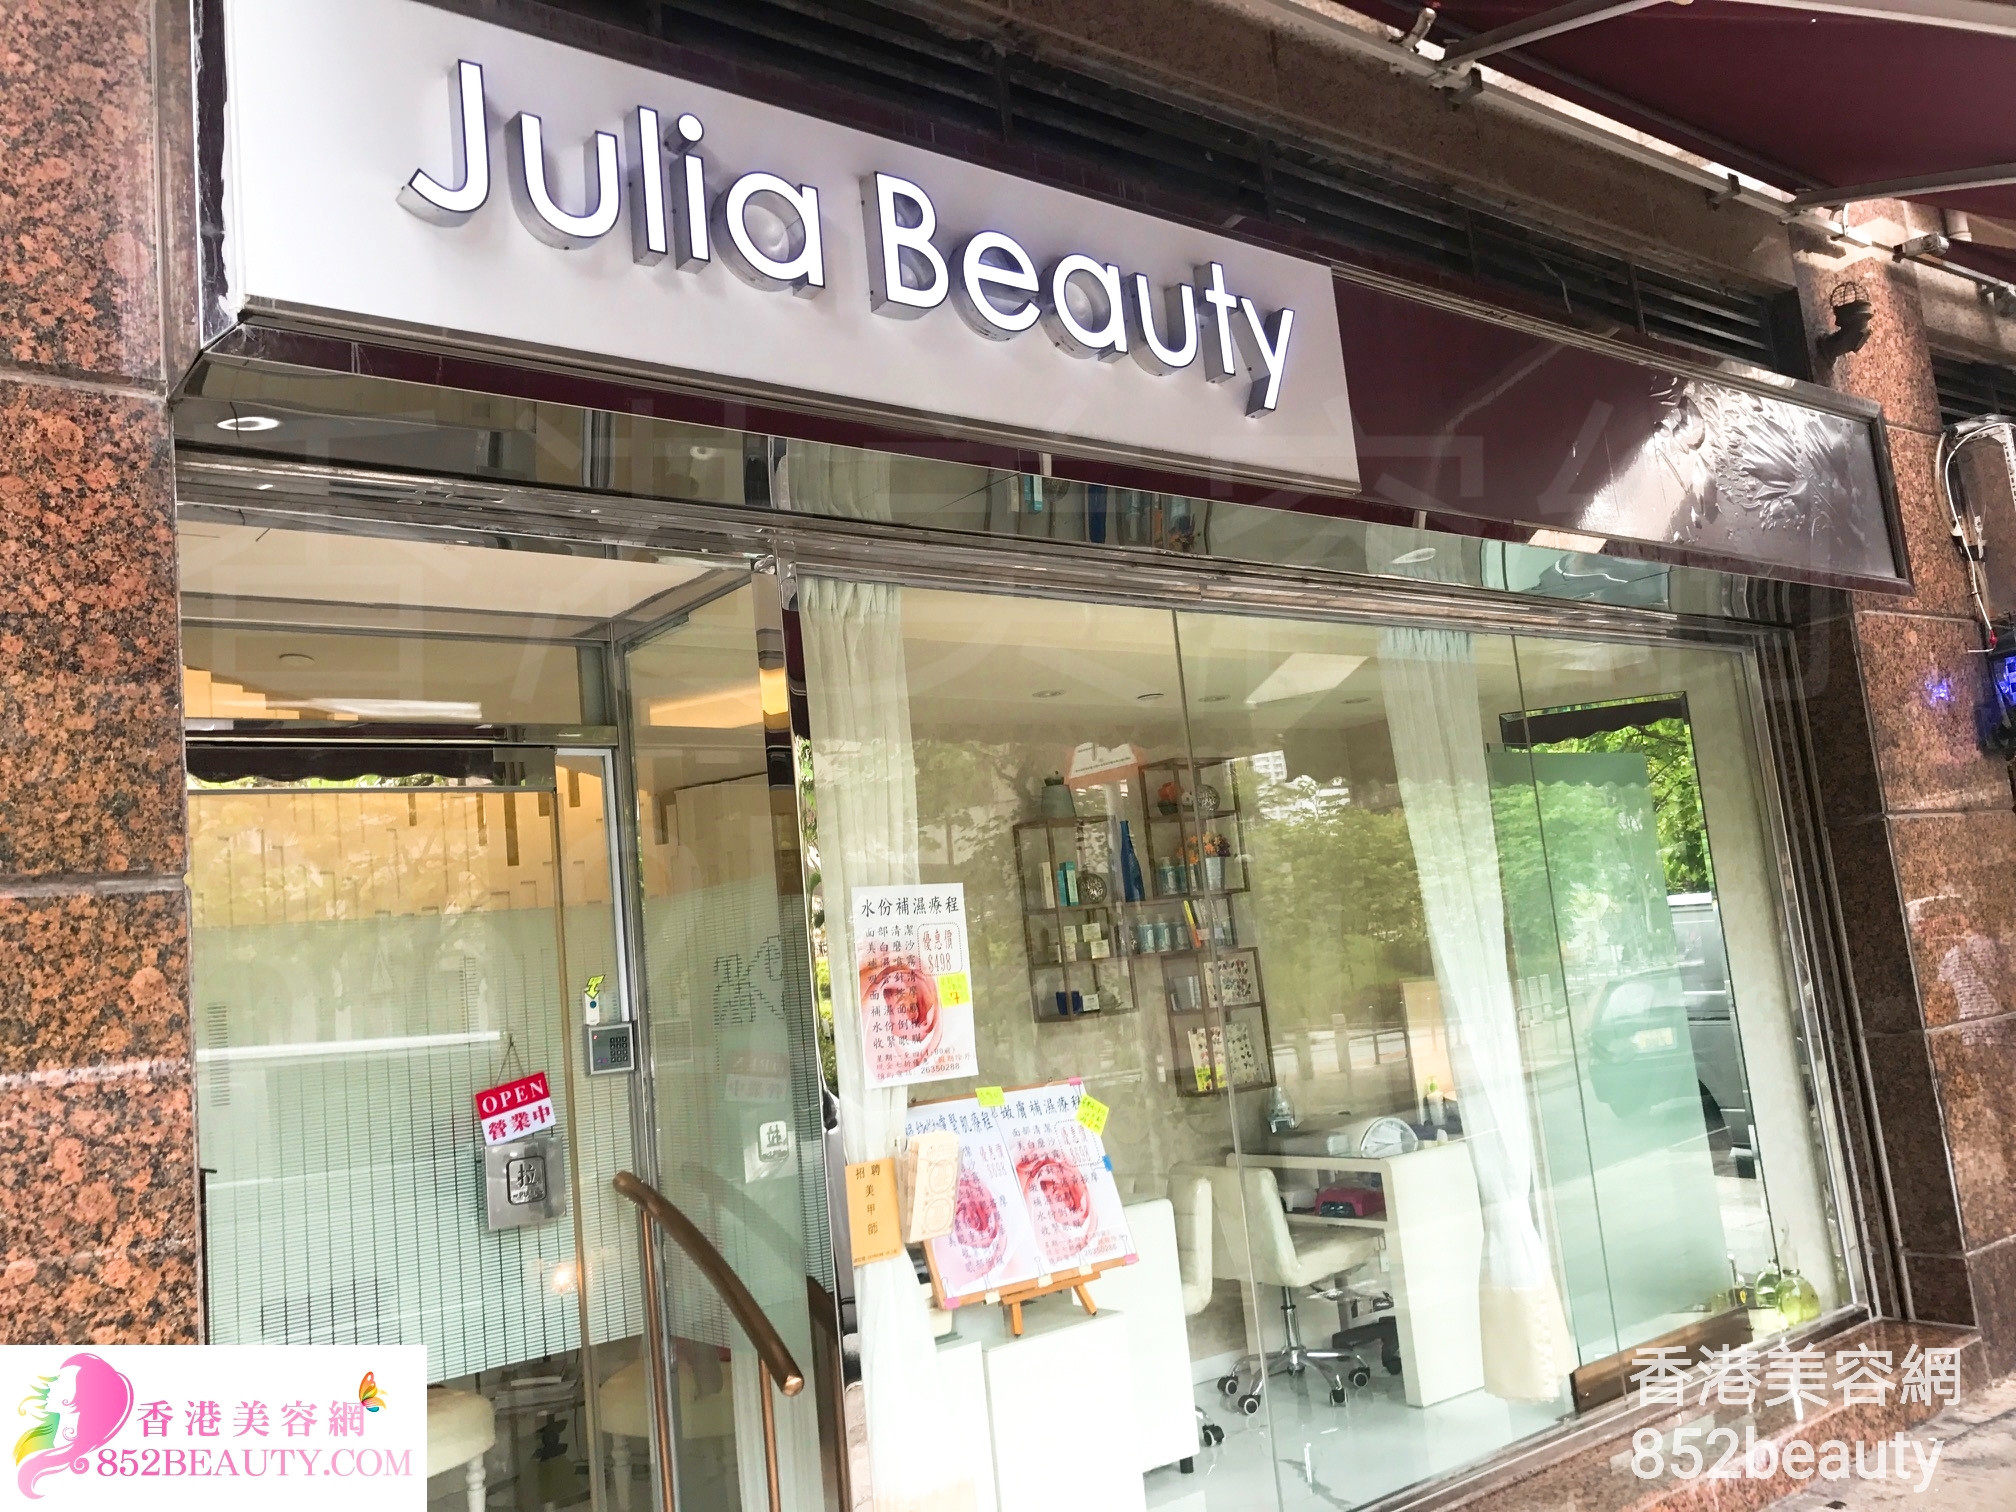 Facial Care: Julia Beauty